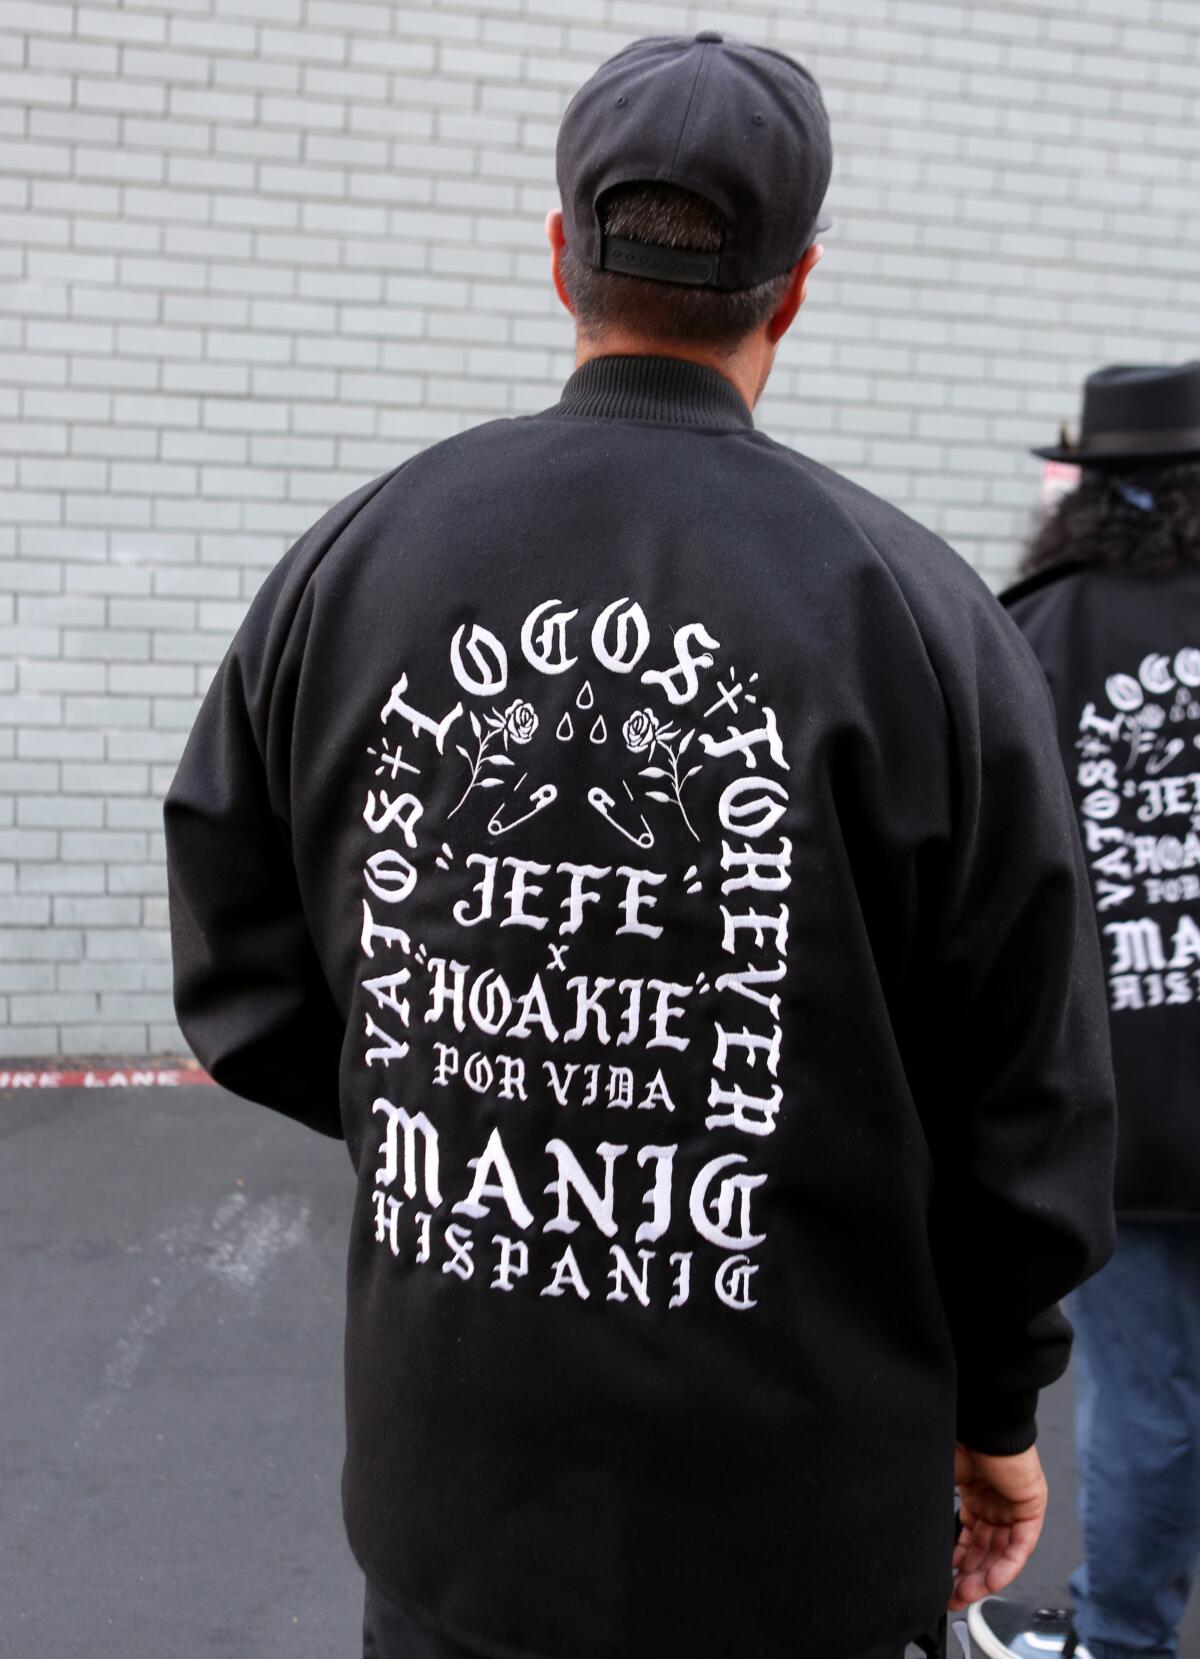 Manic Hispanic's Gilbert "Dreamer" Pichardo wears a jacket memorializing Gabby "Jefe" Gaborno and Steve "Hoakie" Soto.